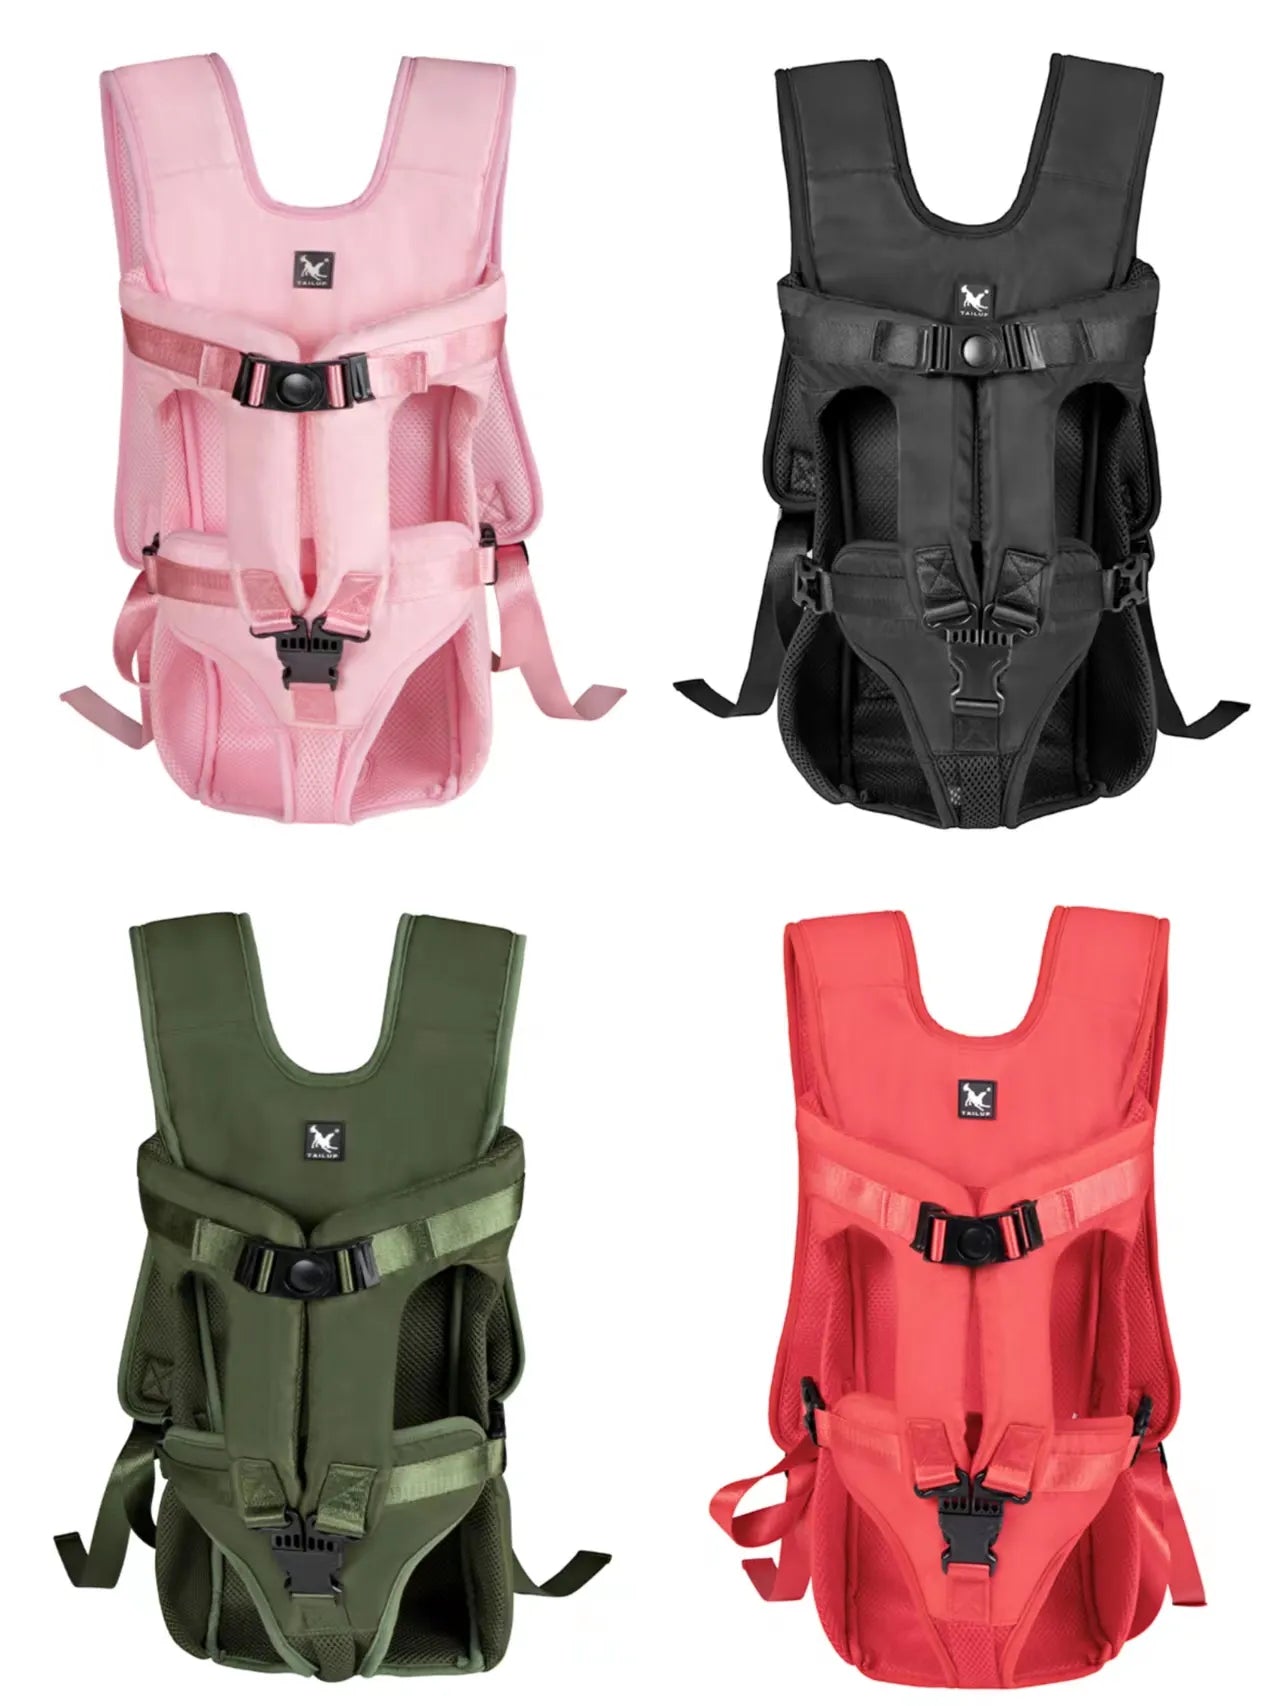 Pet Carrier Backpack: Fashion Leopard Design, Breathable, Durable & Adjustable  petlums.com   